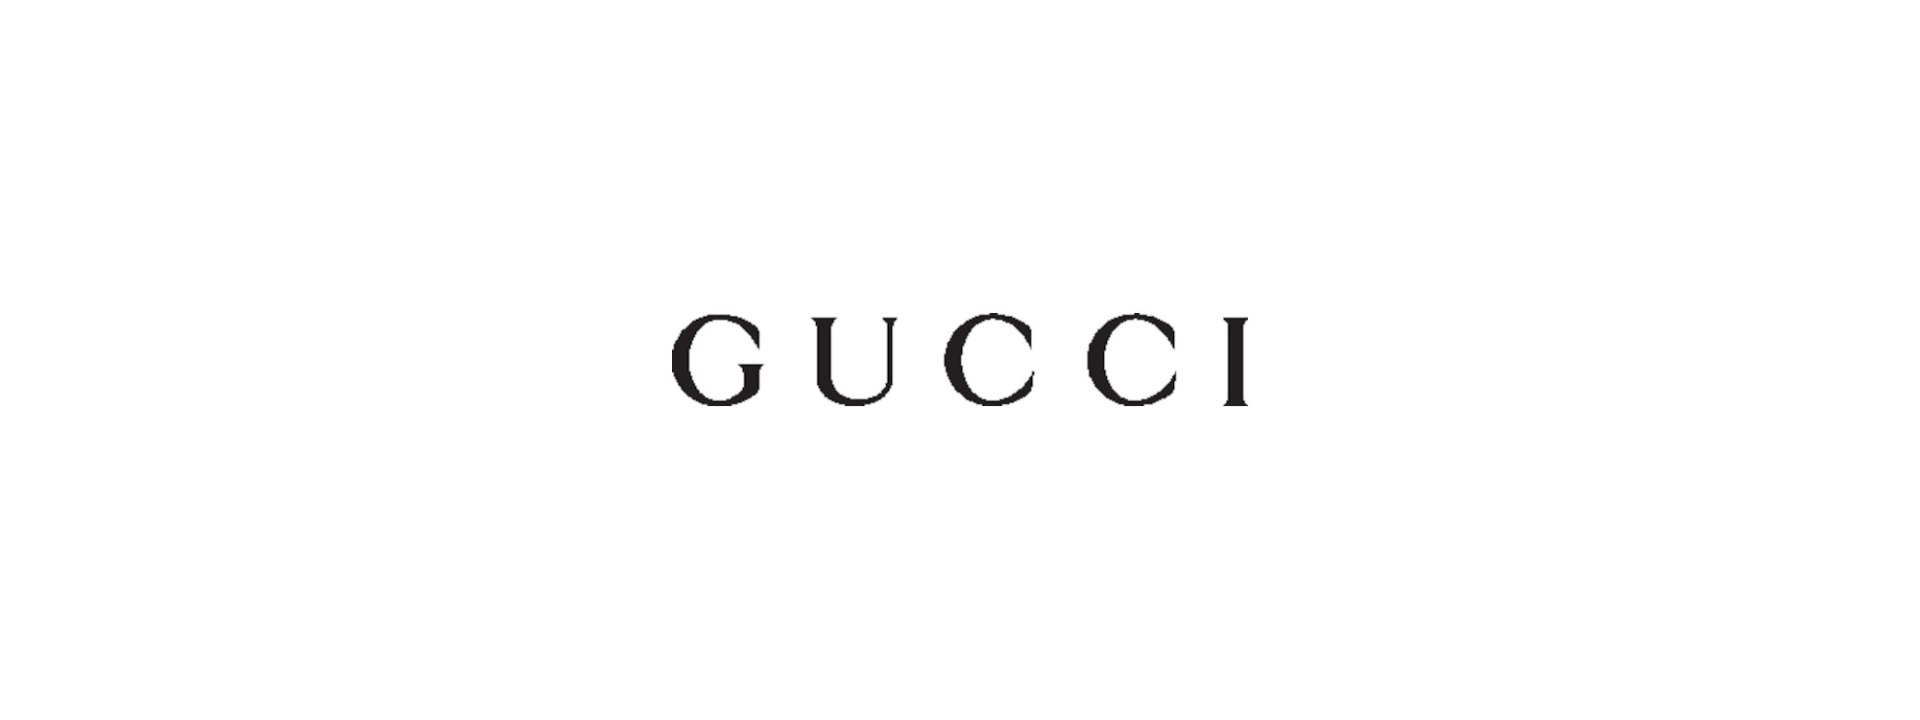 Gucci - Brands - The Optic Shop